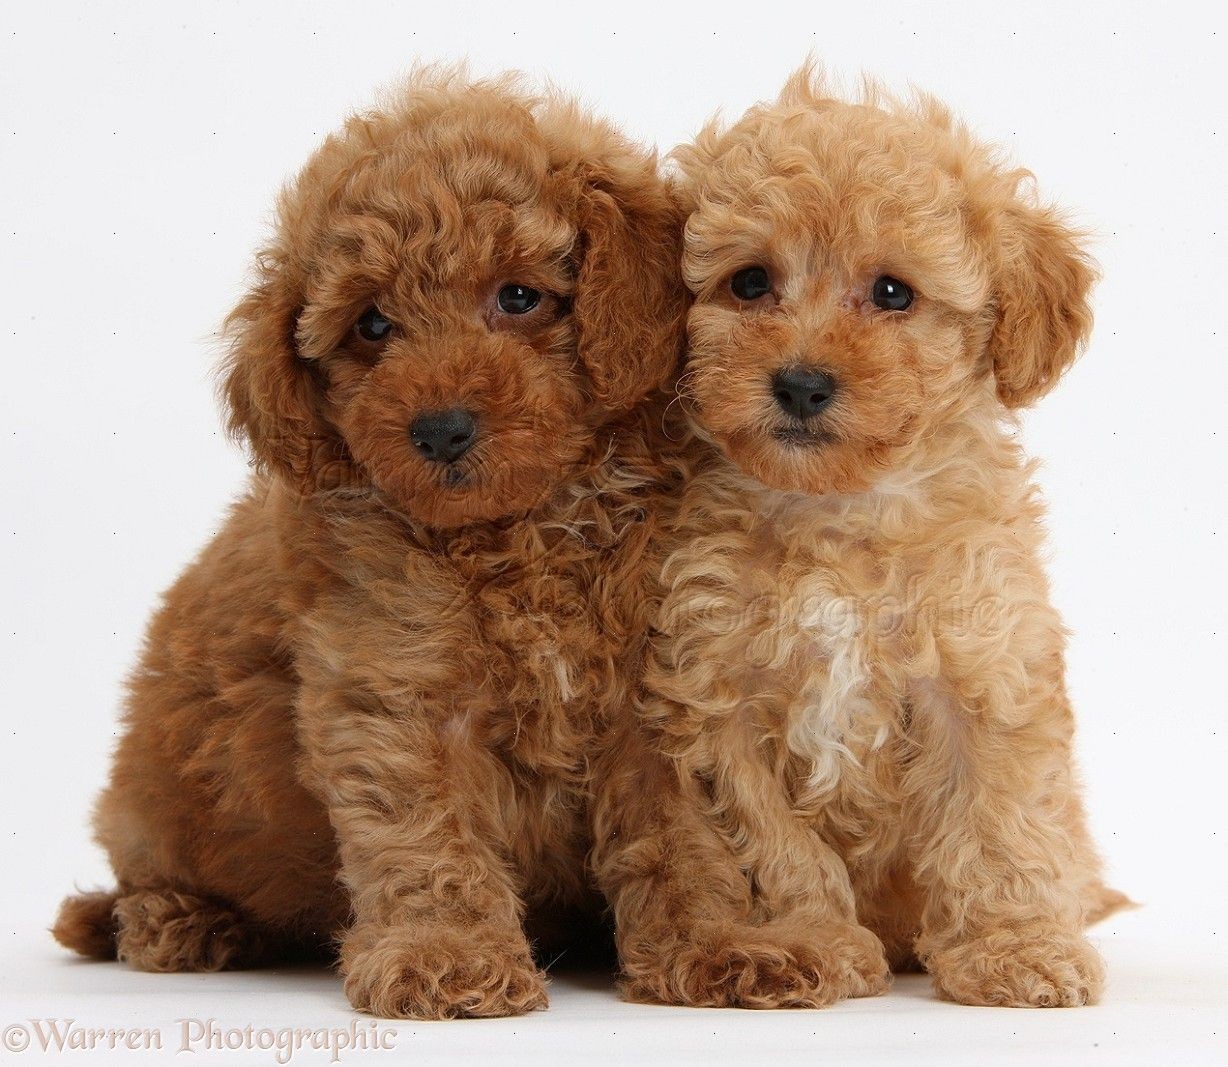 Adorable Tiny Puppies